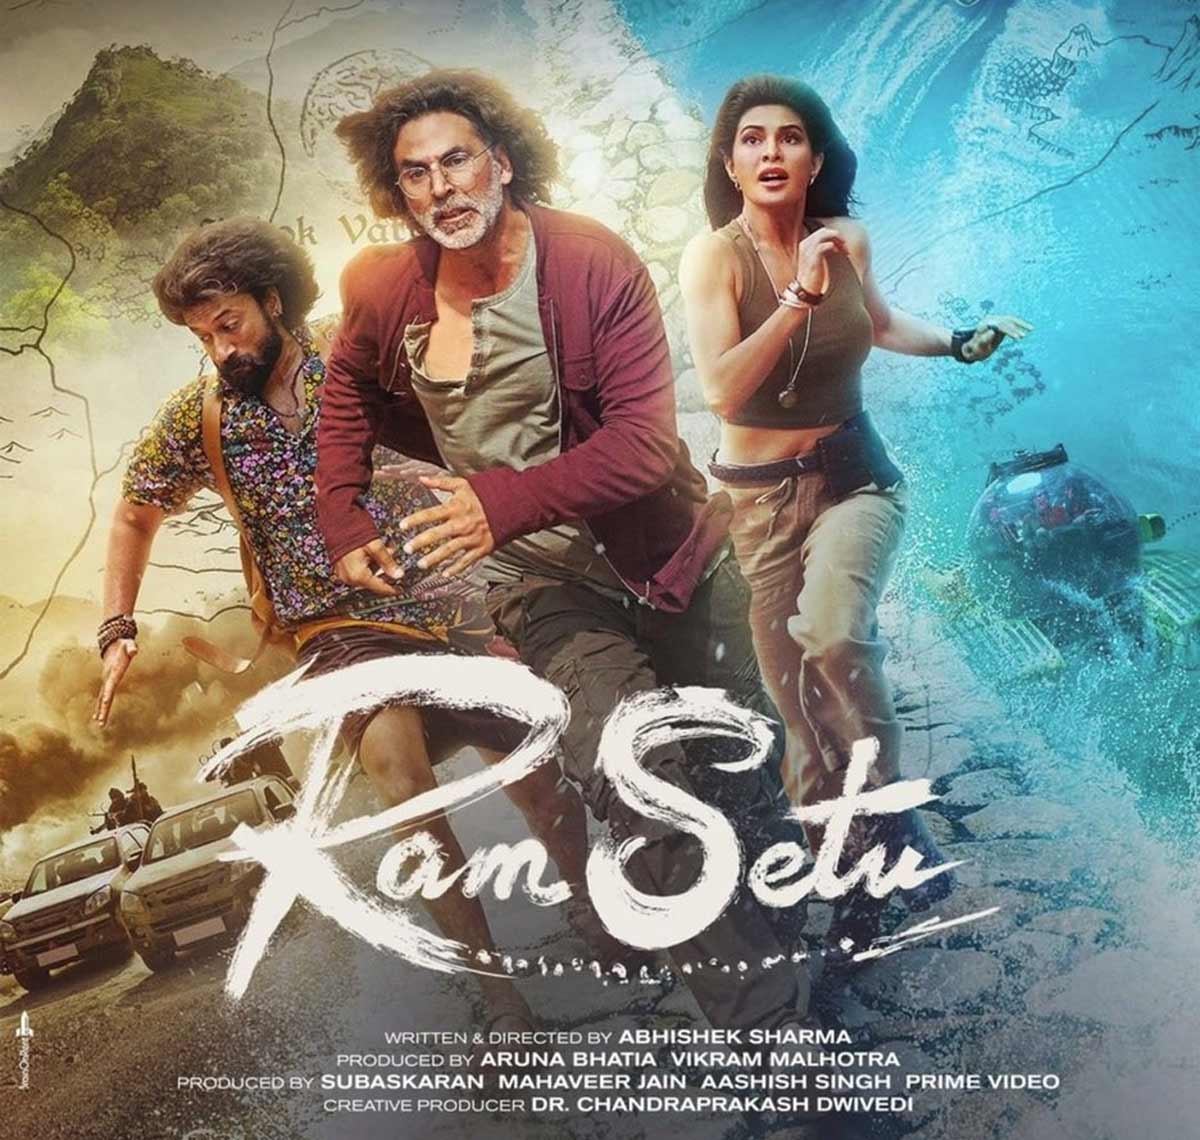 Ram Setu Movie Review